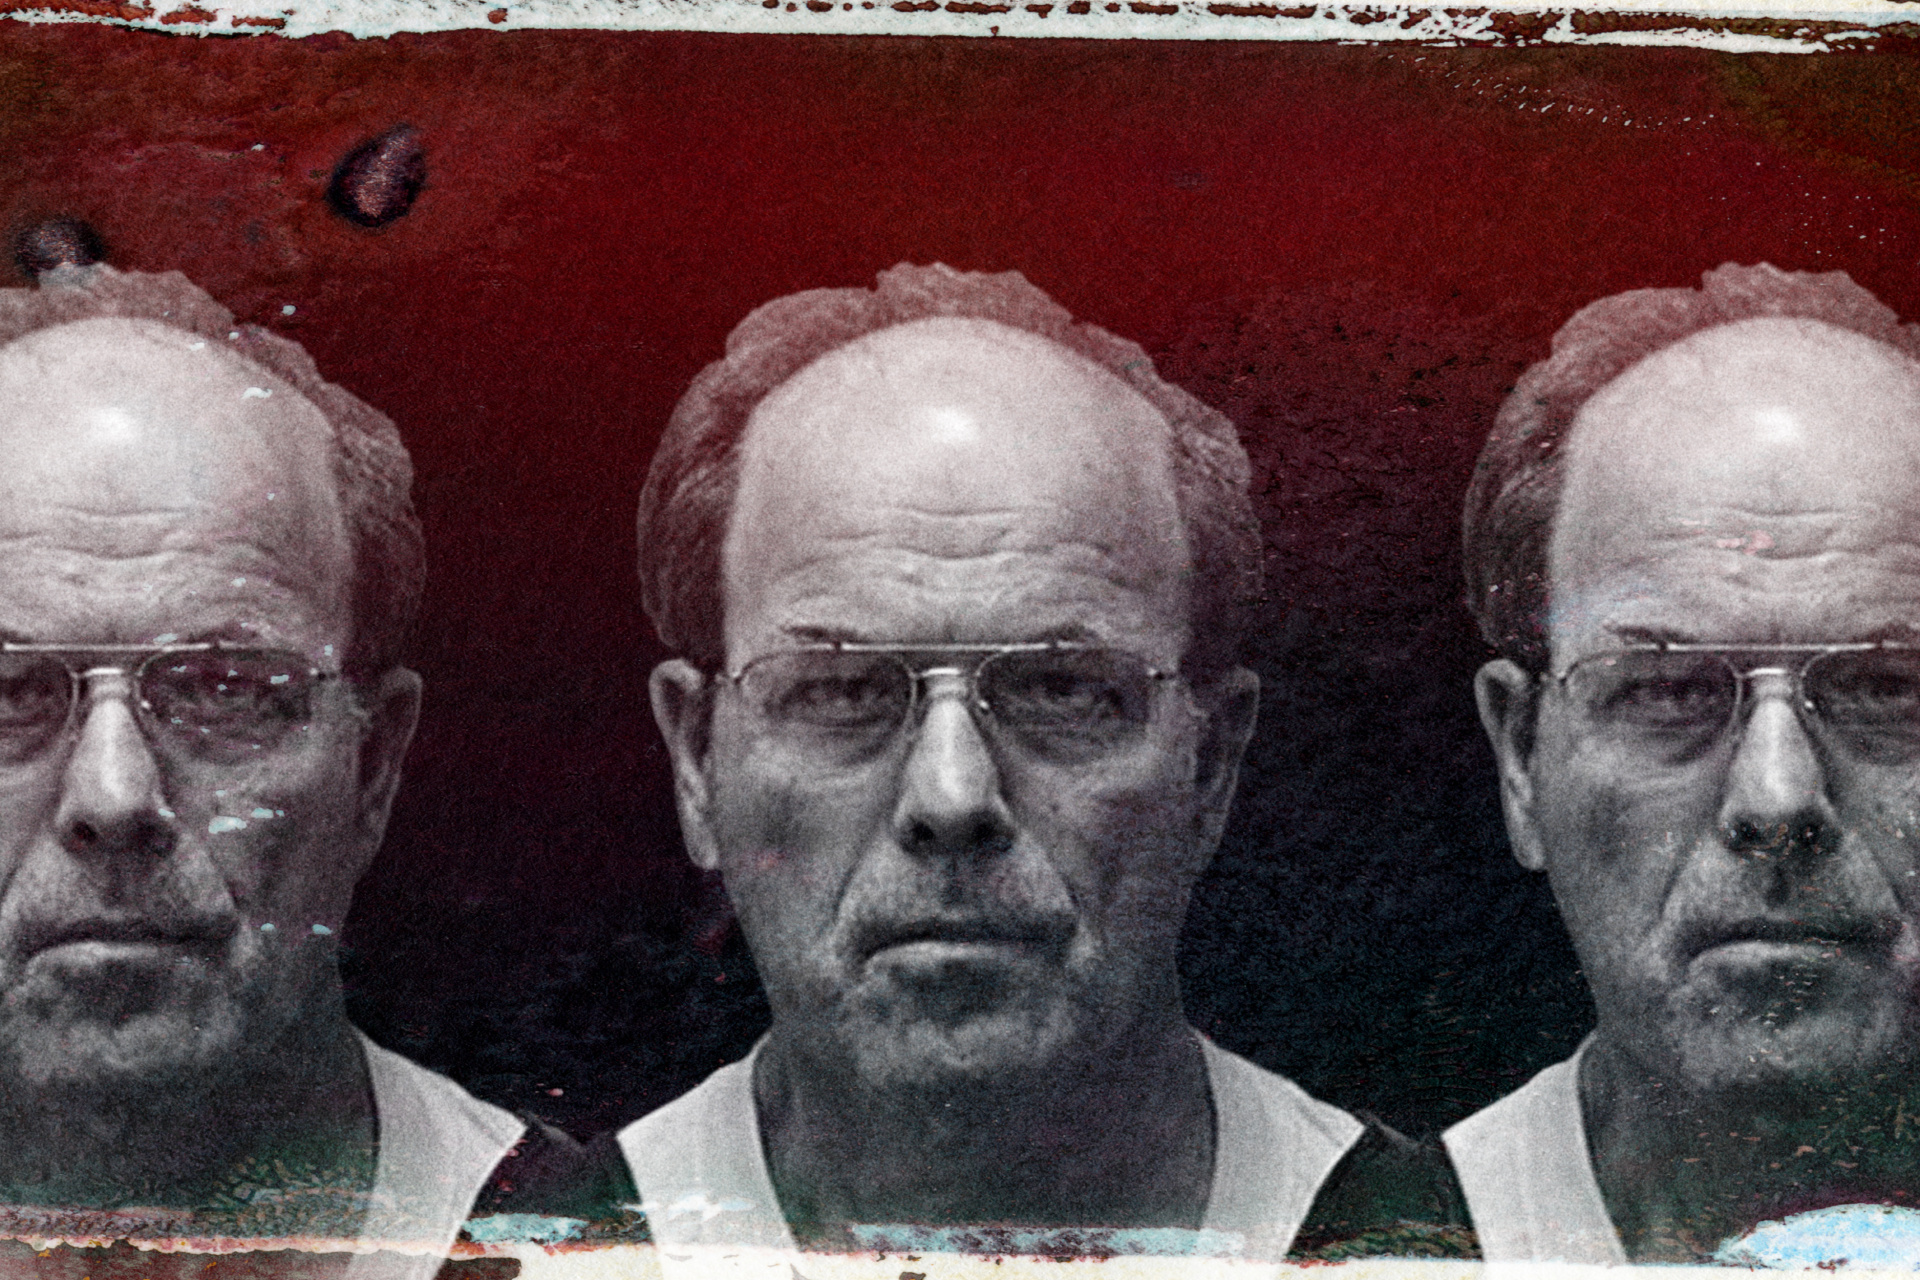 Dennis Rader ή BTK: Ο serial killer που τρομοκρατούσε μια πόλη 30 χρόνια – 10 ανθρωποκτονίες από πρόθεση (βίντεο)